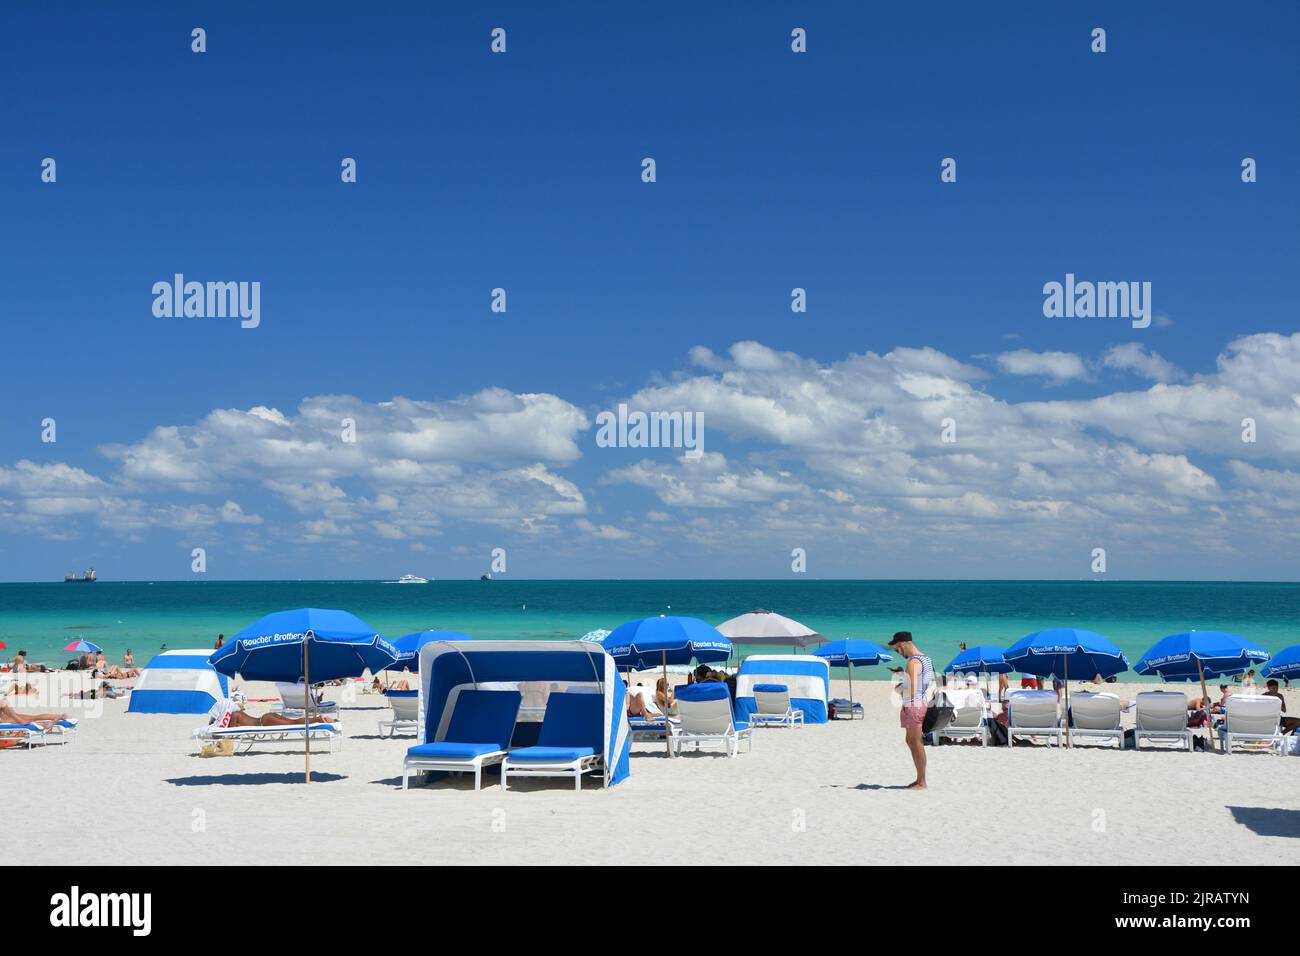 Miami Beach, USA - March 18, 2017 : Tourists on beach sunbeds and umbrellas in South Beach, Miami Beach by Atlantic Ocean. Stock Photo